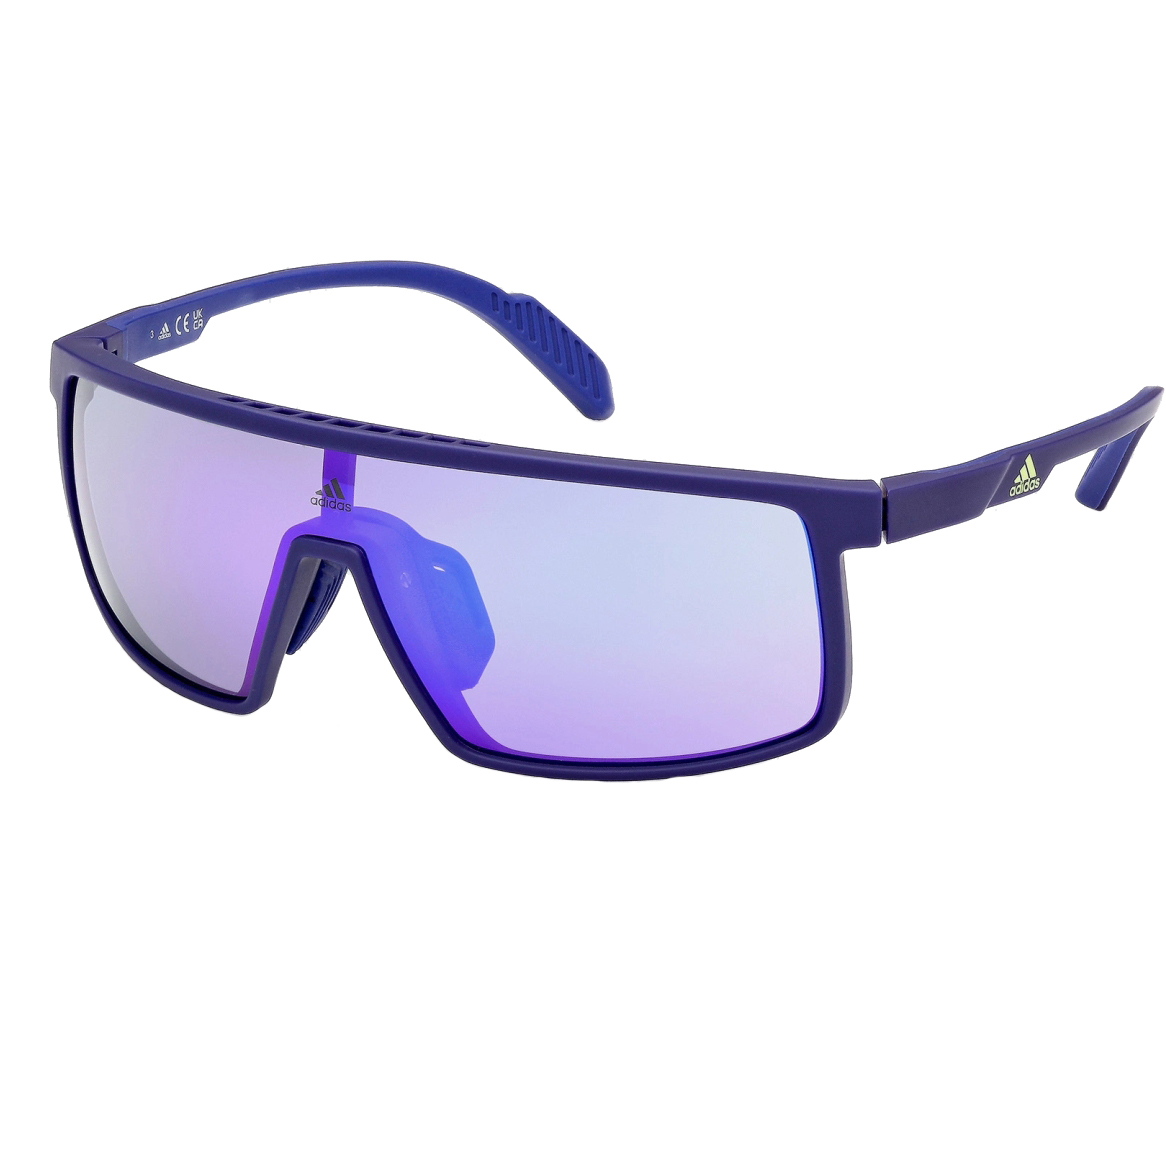 Image of adidas Prfm Shield SP0057 Sport Sunglasses - Blue/Other / Contrast Mirror Violet